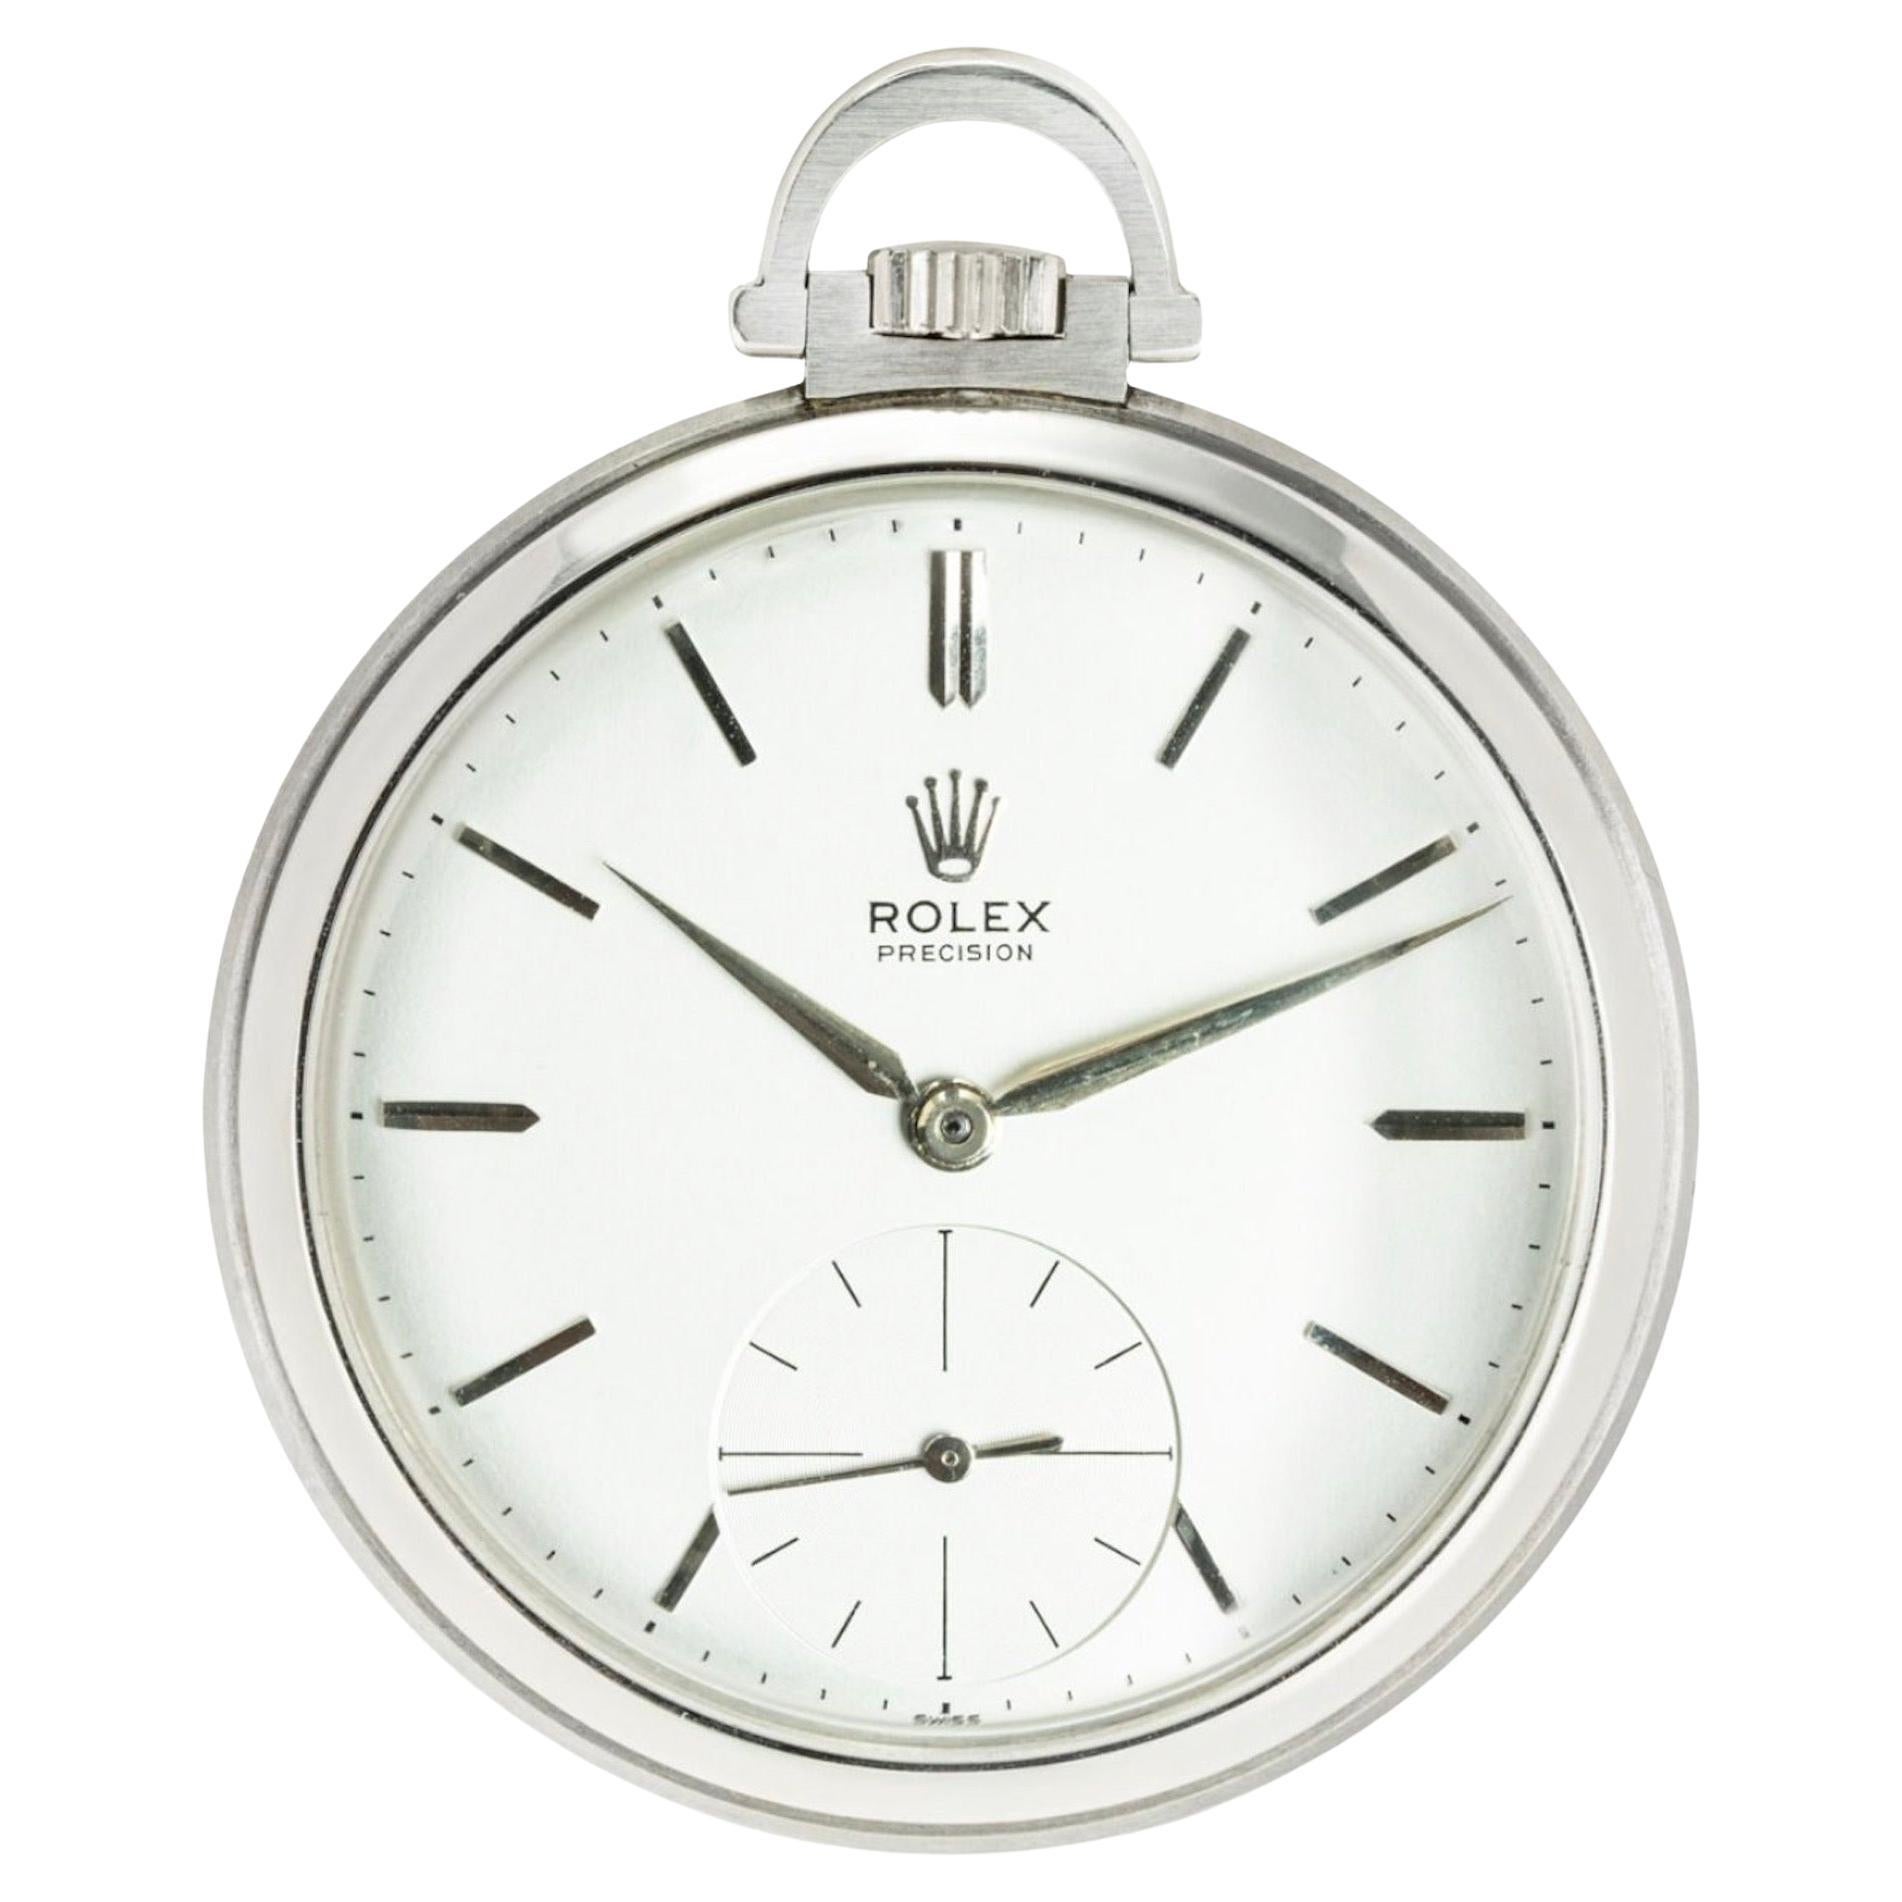 Does Rolex make pocket watches?